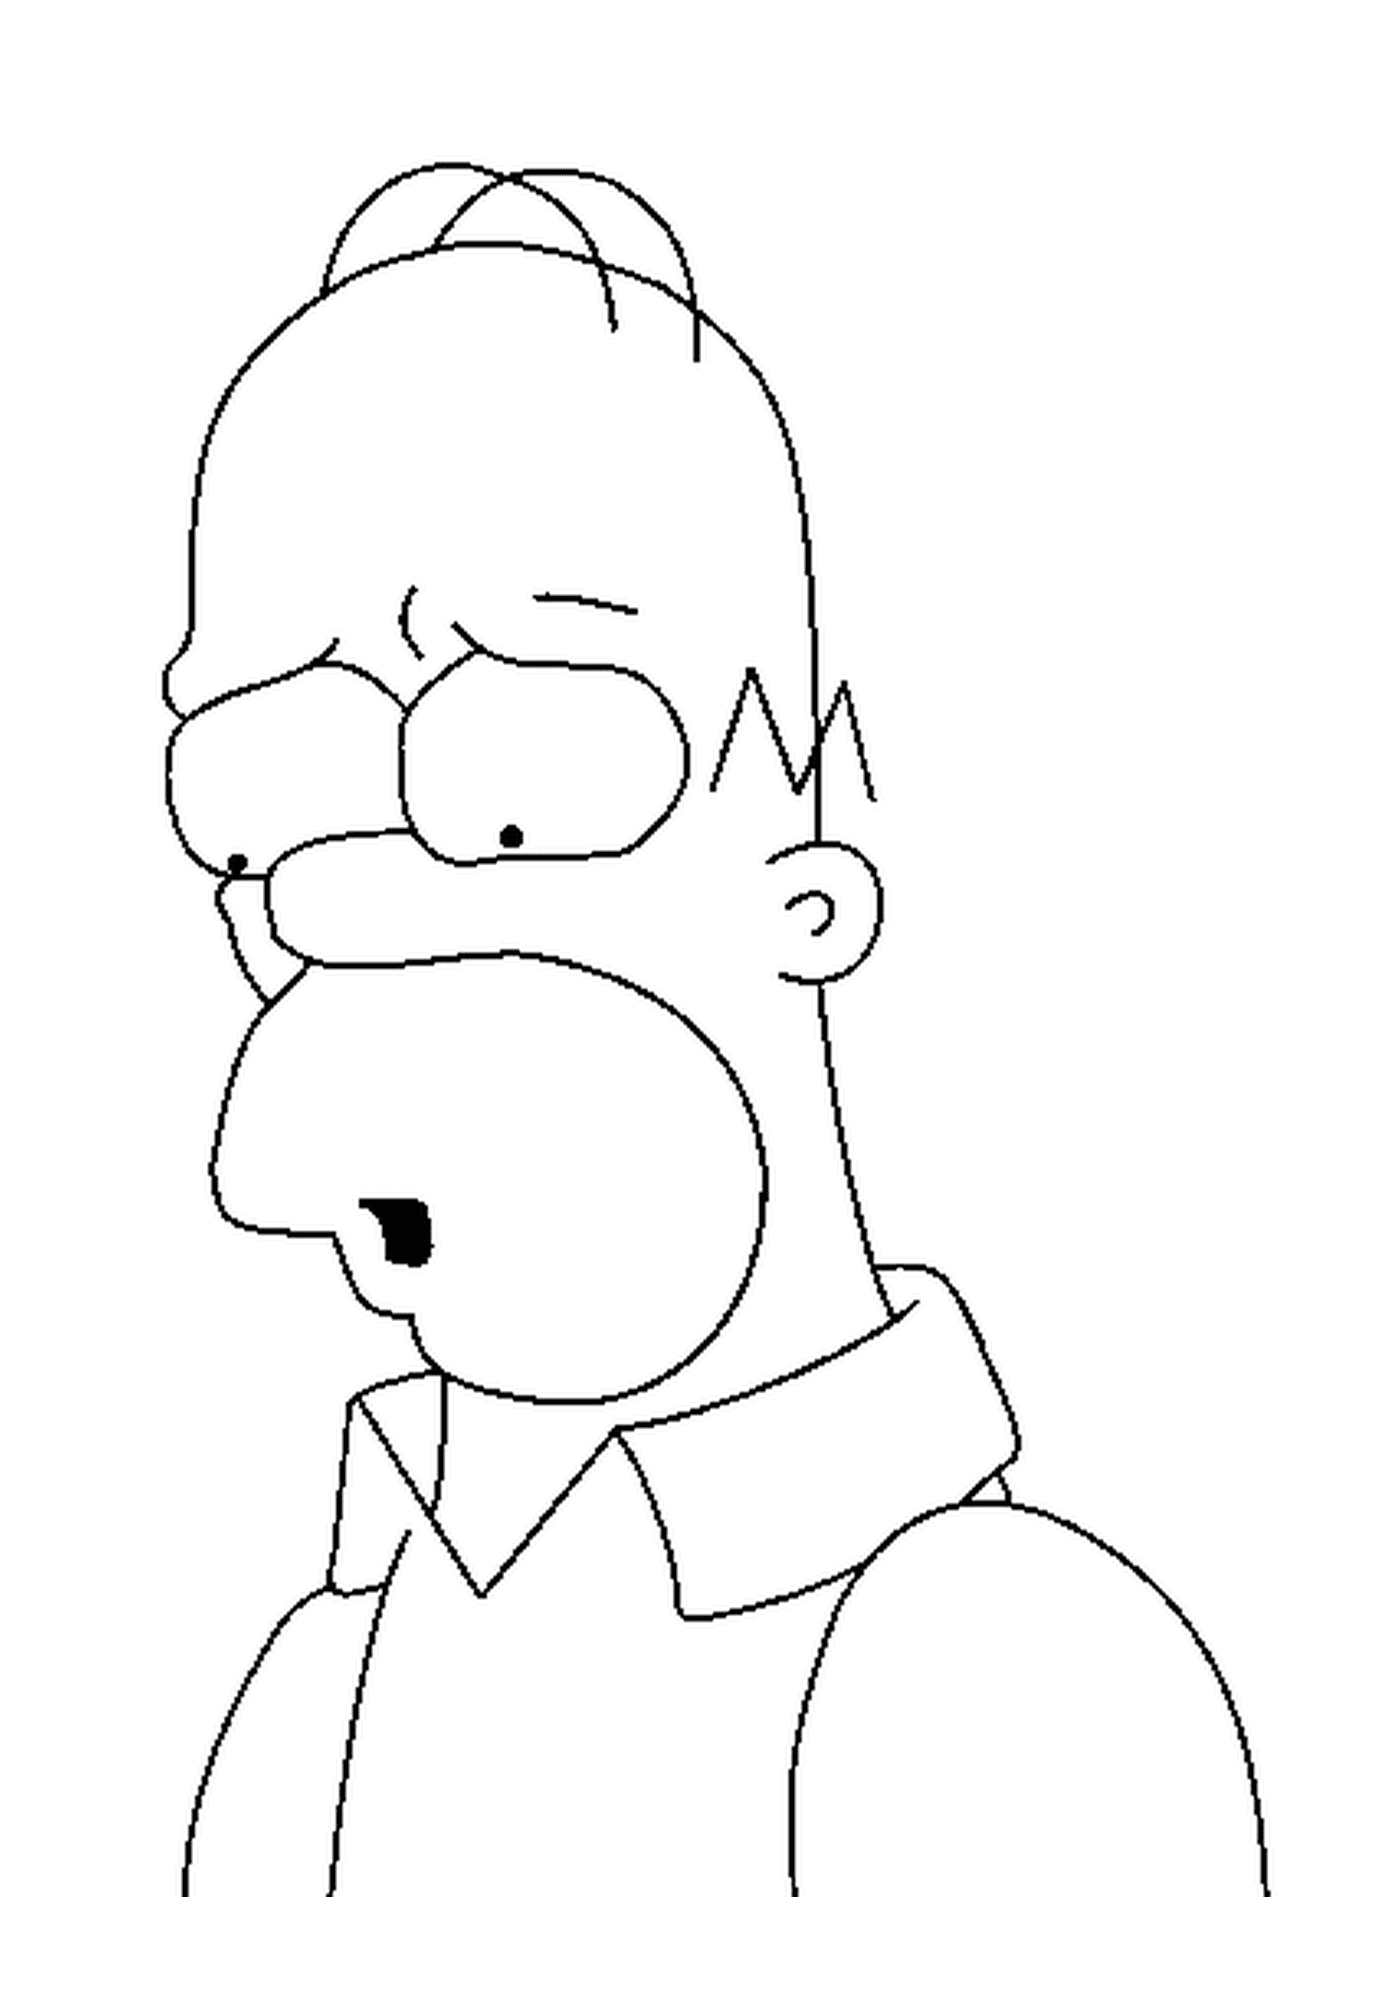  Homer Simpson, sad face 